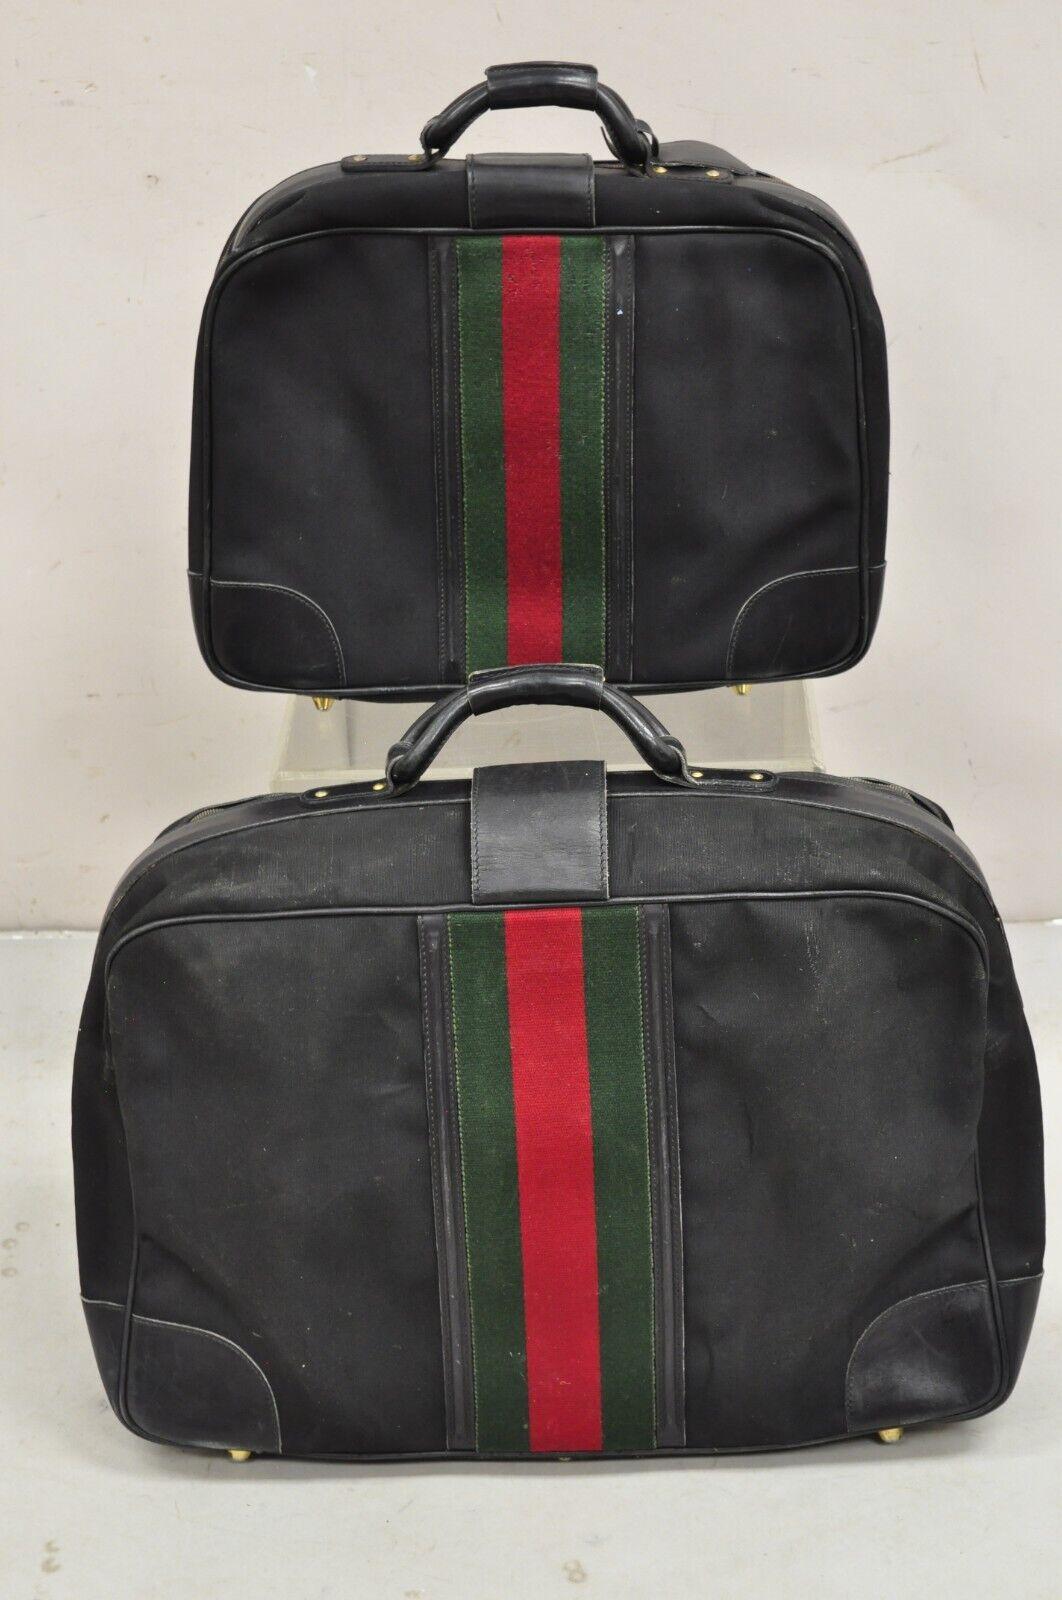 Late 20th Century Vintage Gucci Black Canvas & Leather Suitcase Luggage Travel Bag Set - 2 Pcs For Sale